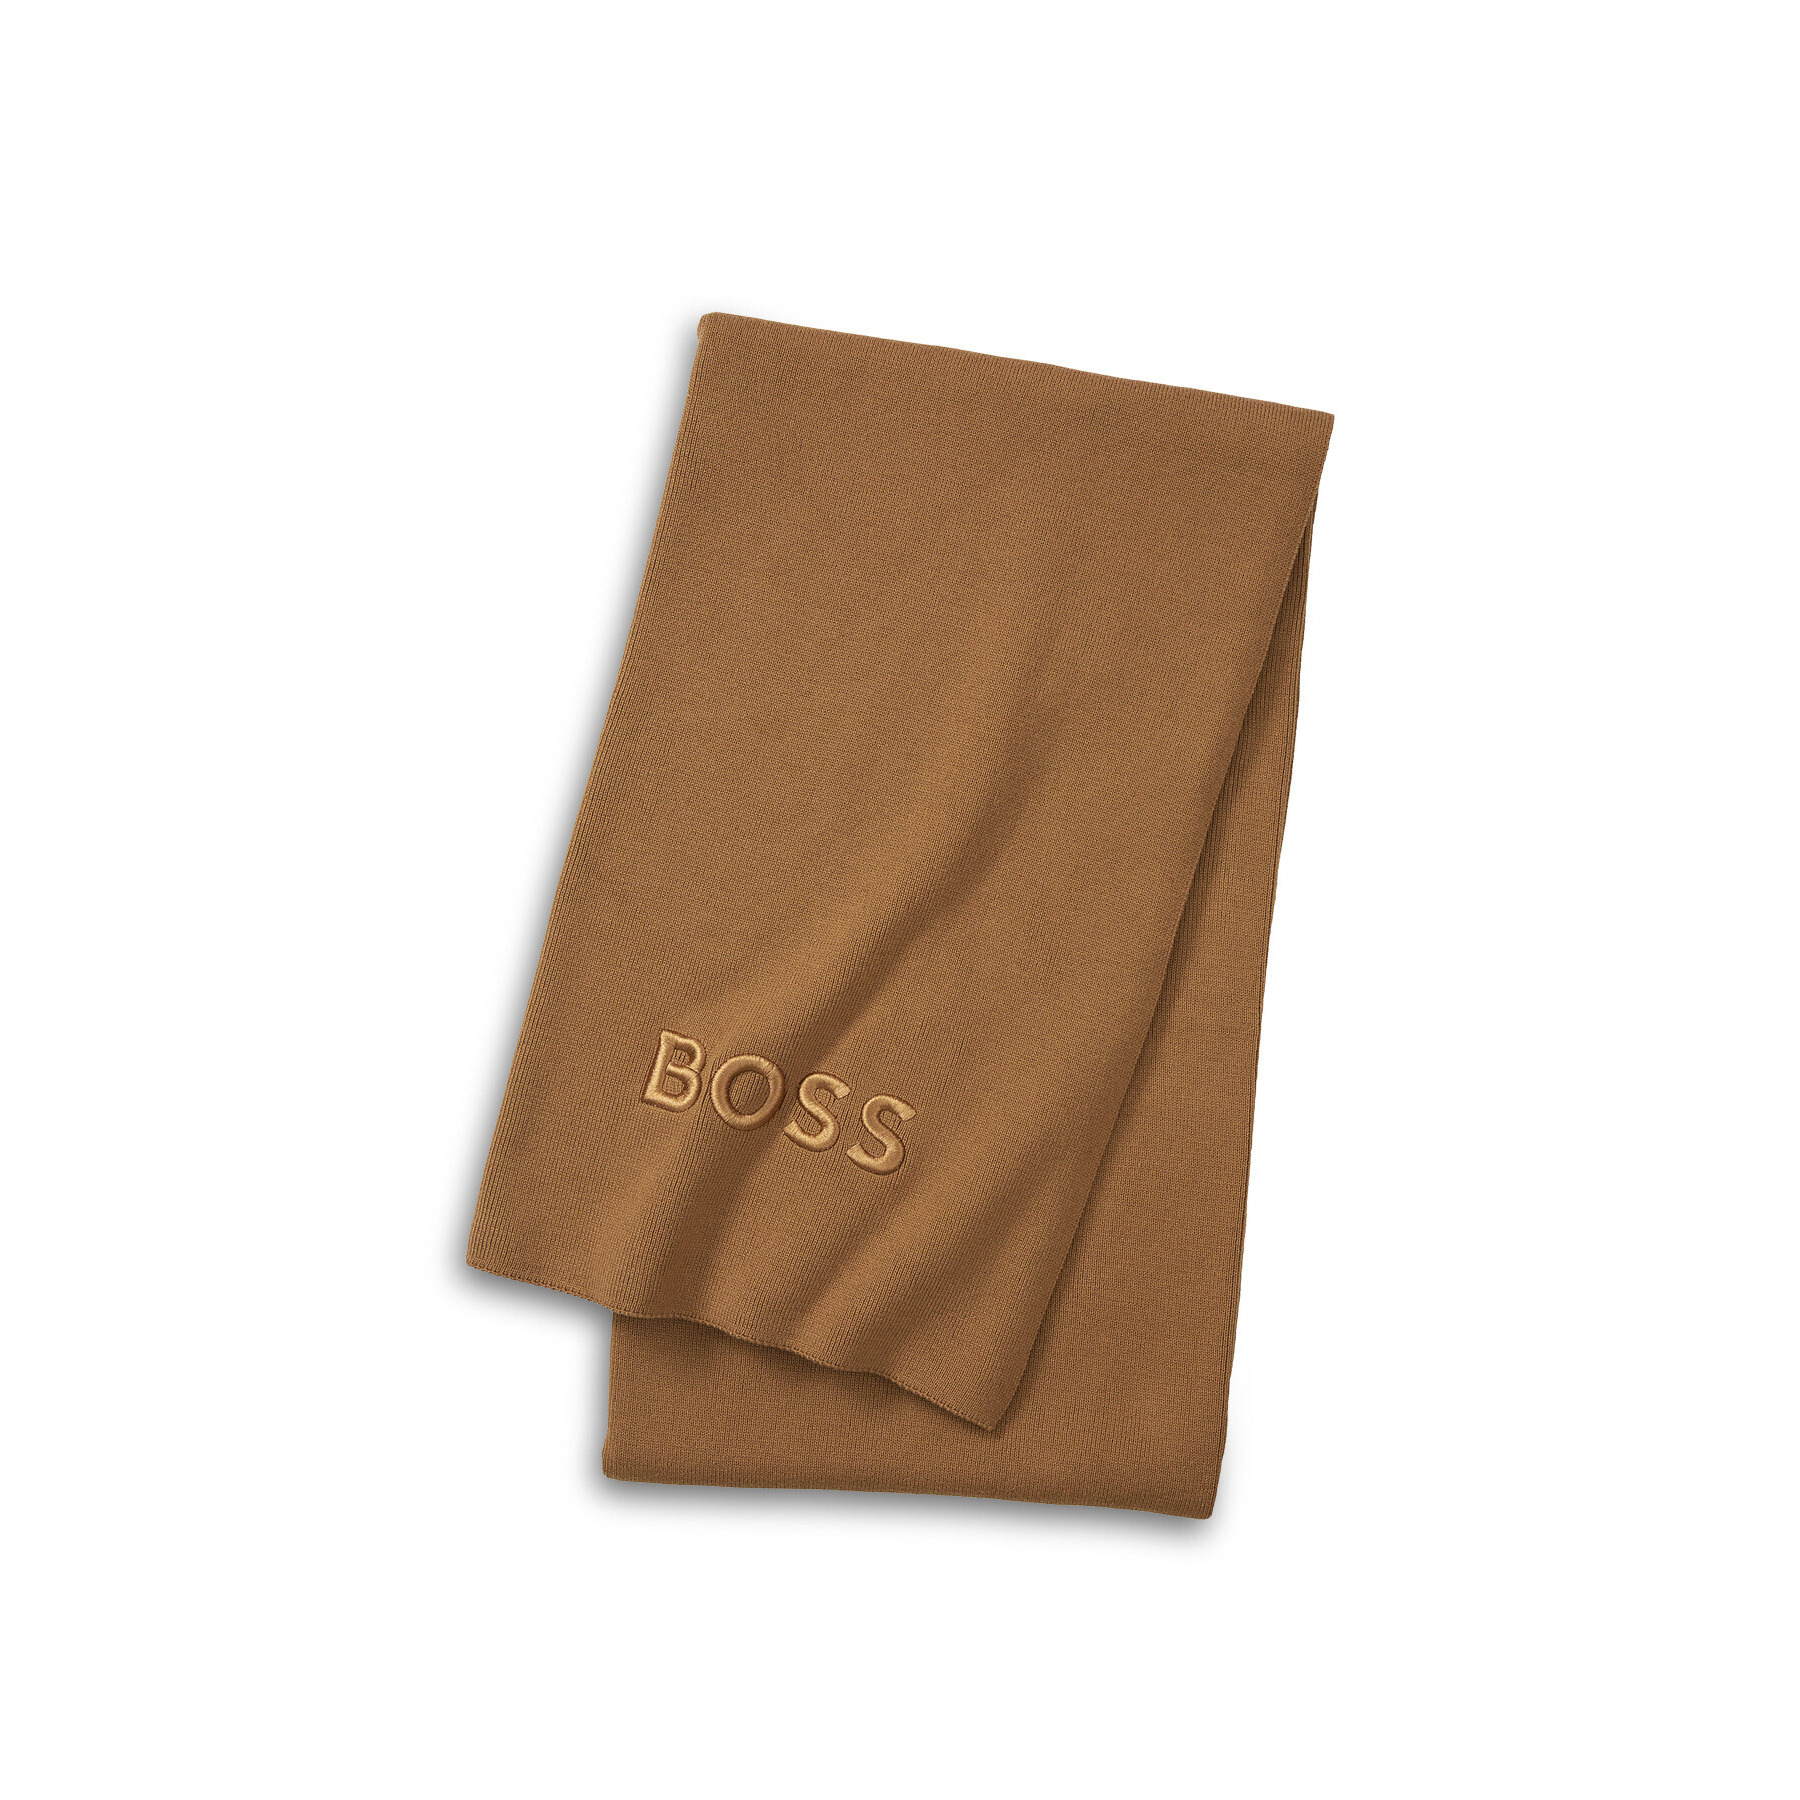 BOSS Home Bold Logo Throw - Size 130x170cm Tan - image 1